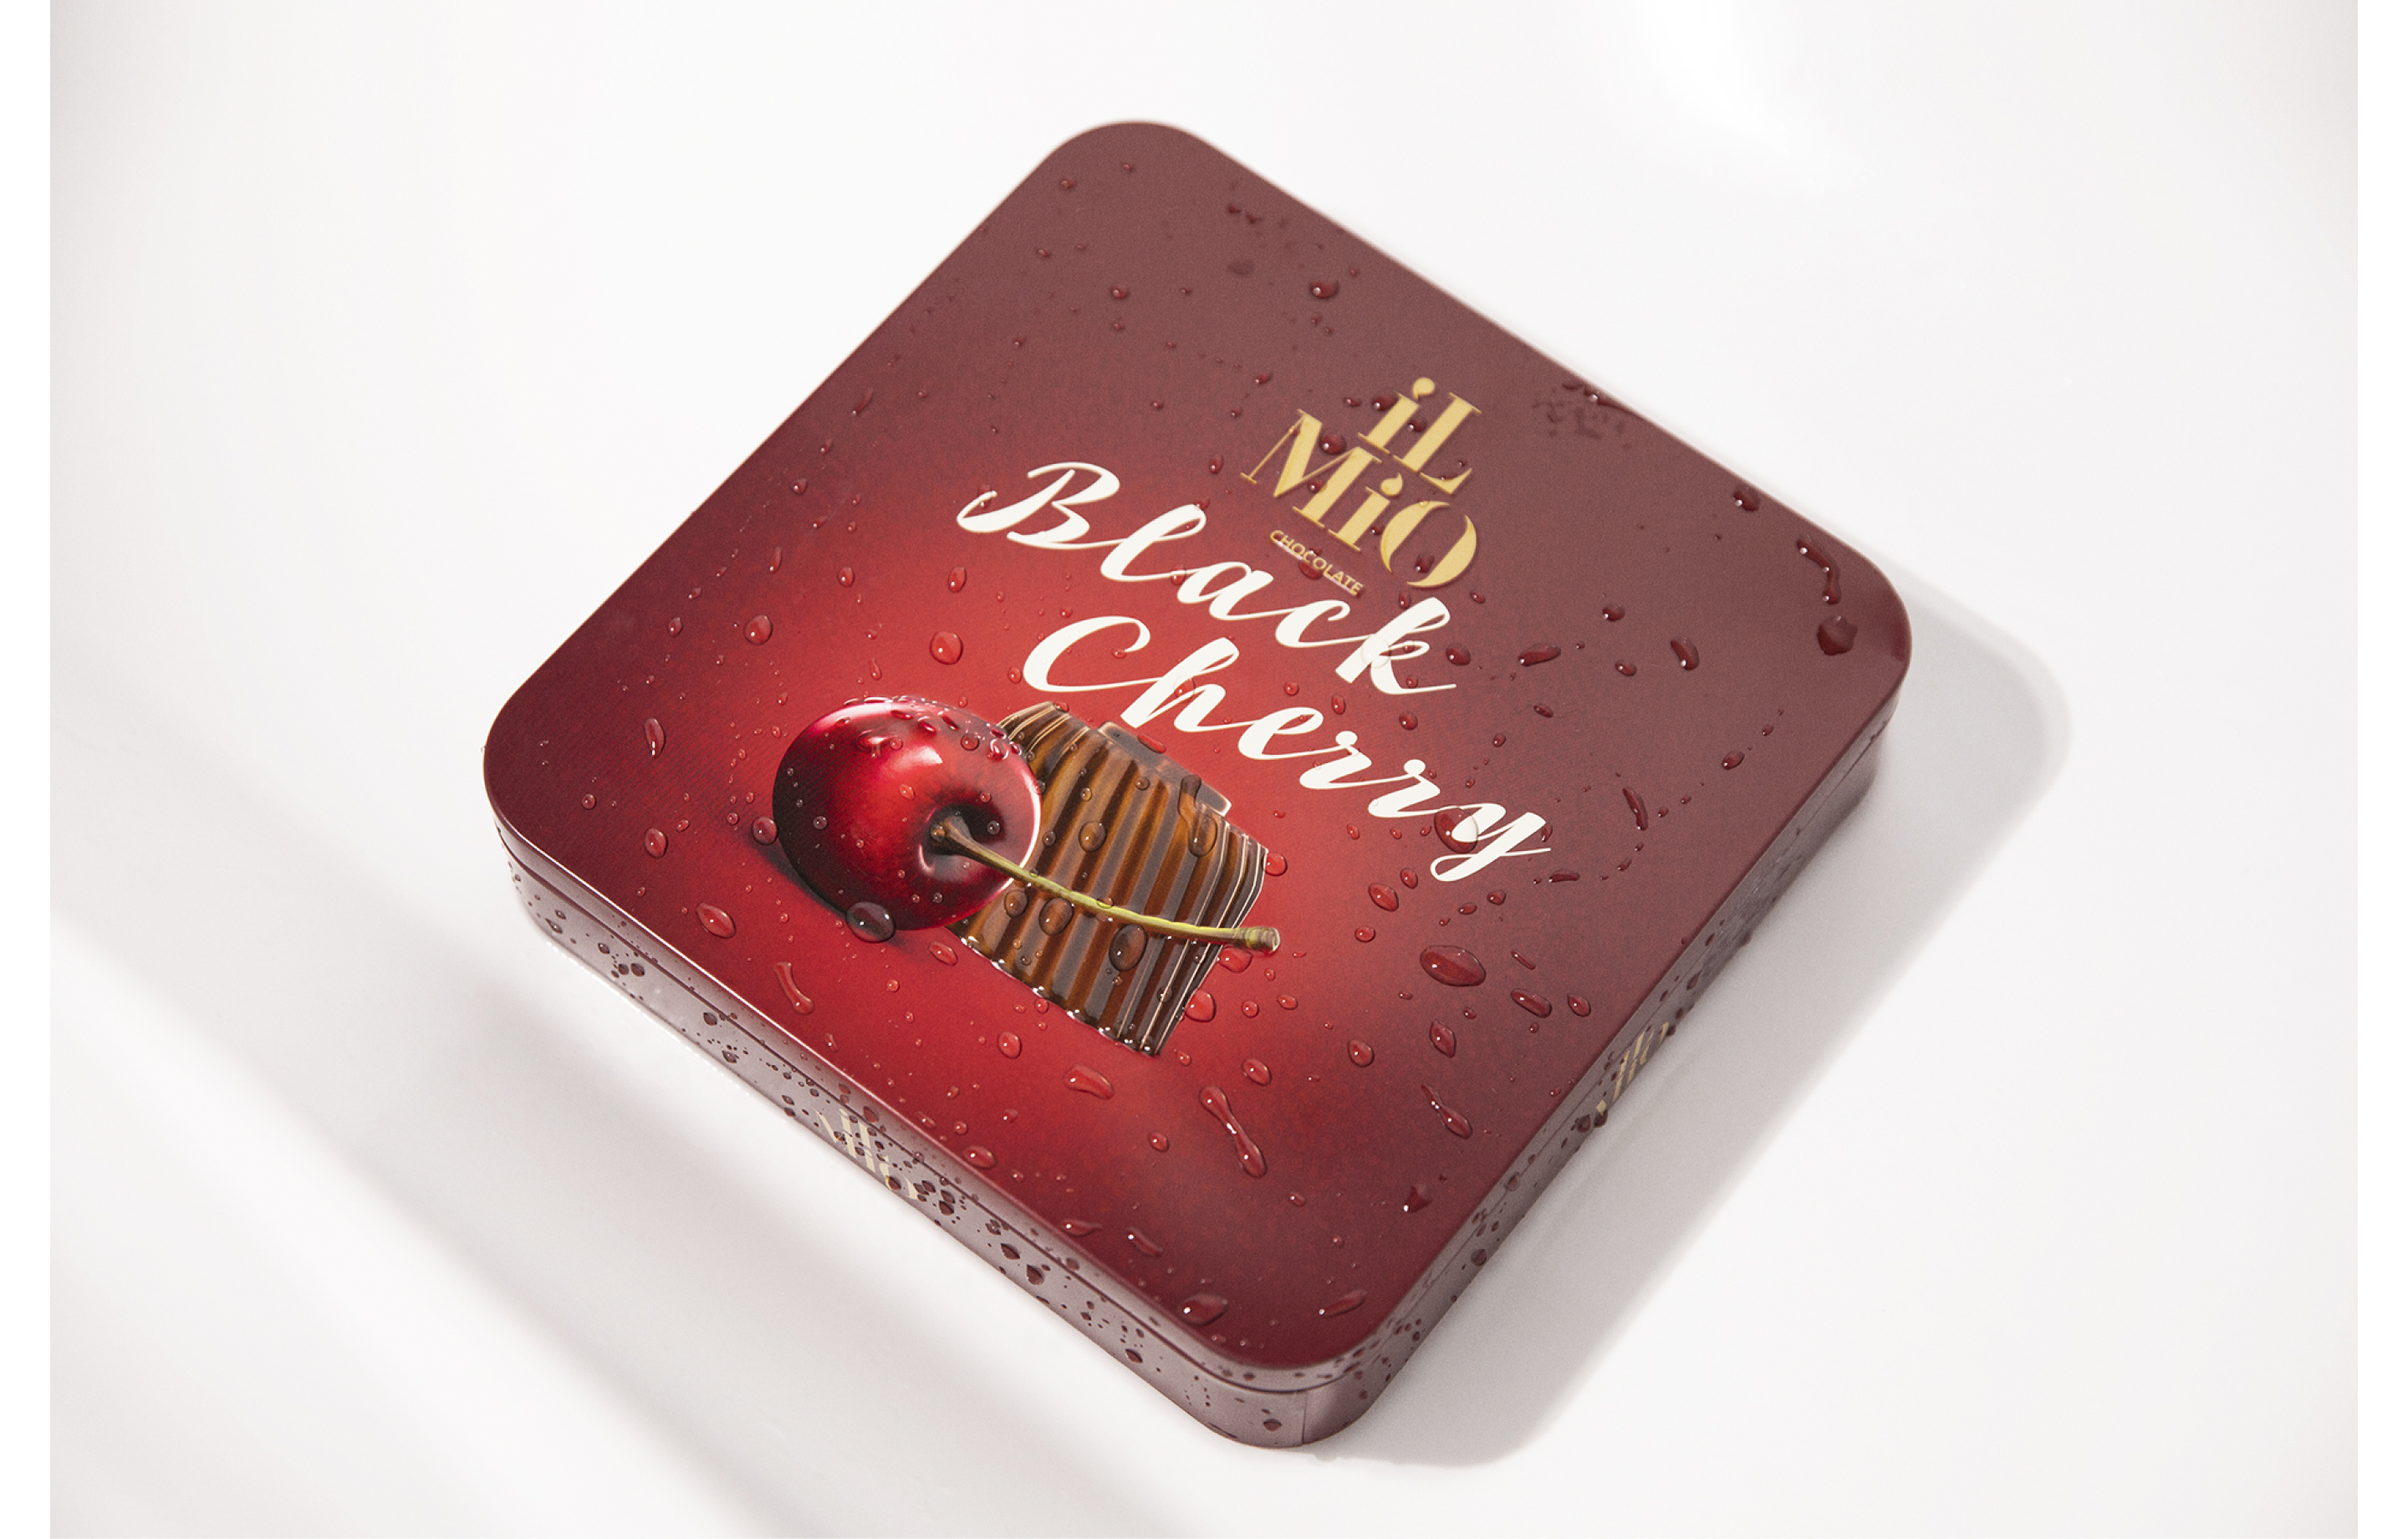 Black Cherry & Chocolate Sweets — Изображение №4 — Графика, 3D на Dprofile